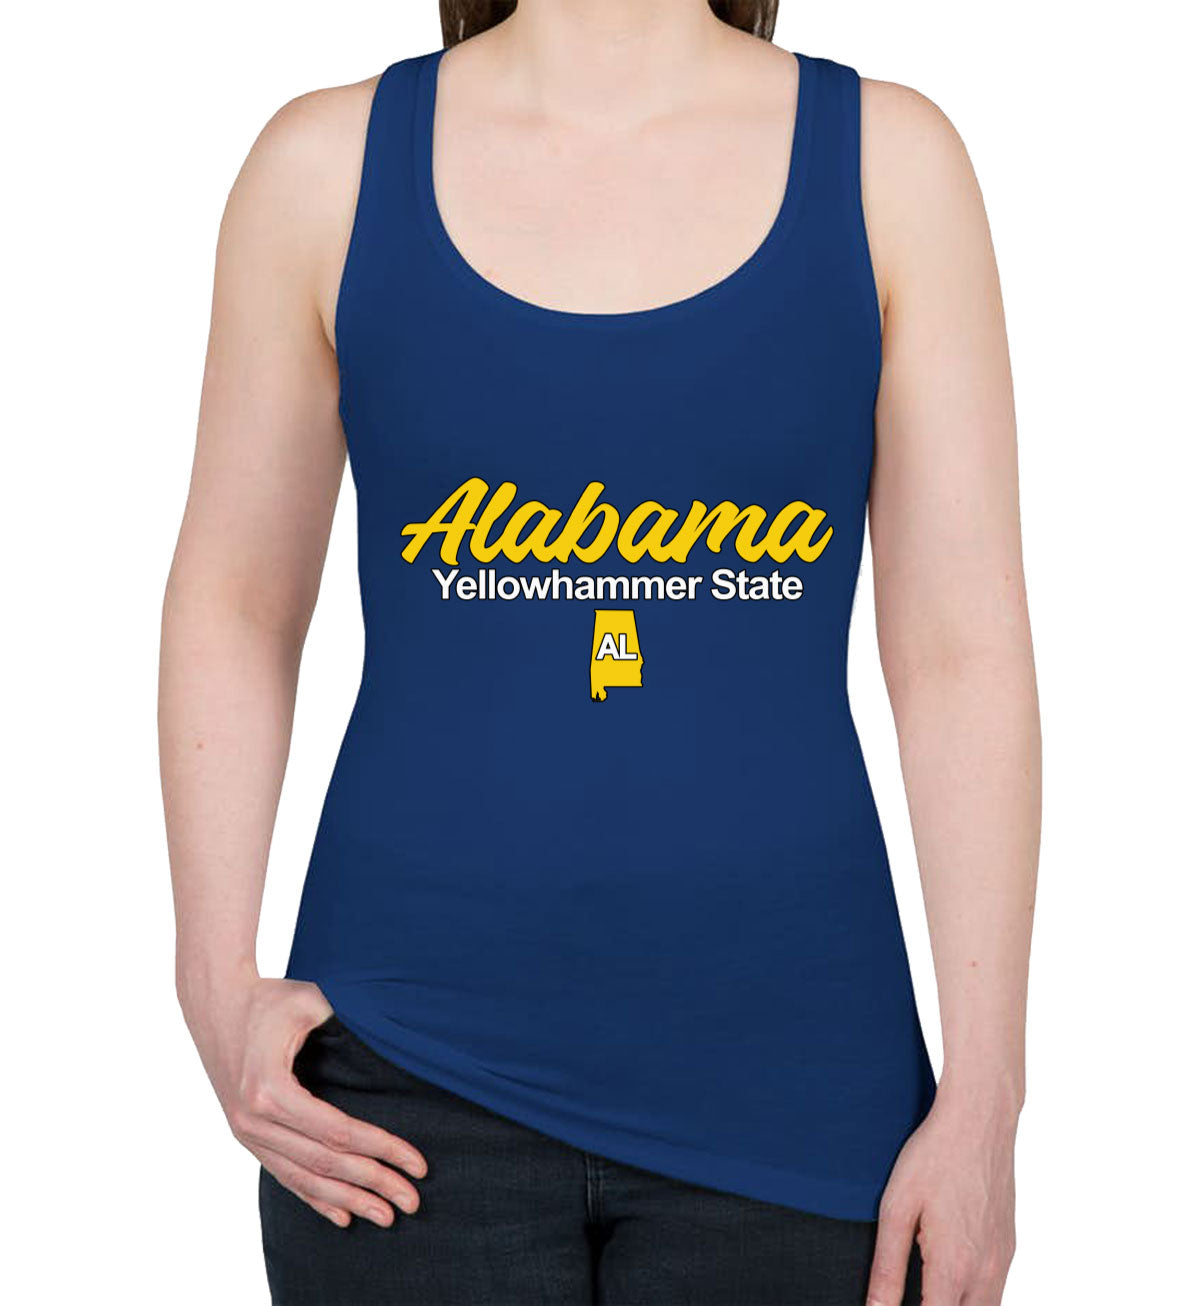 Alabama Yellowhammer State Women's Racerback Tank Top